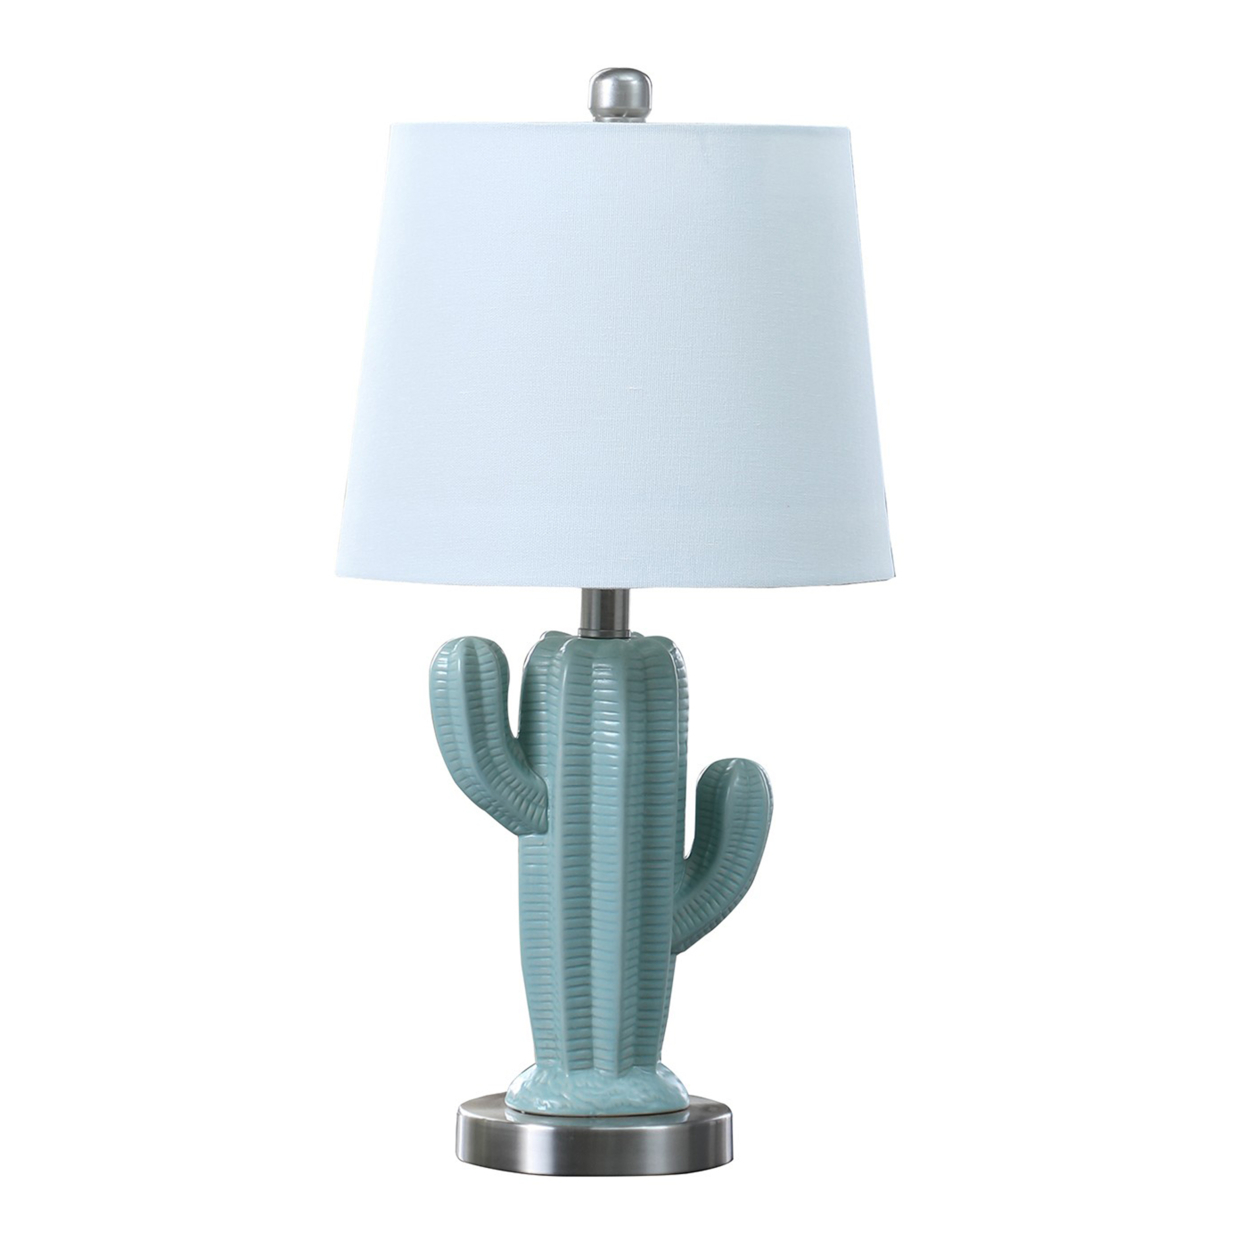 22 Inch Accent Table Lamp, Cactus Designed Body, Metal Base, Blue, White- Saltoro Sherpi